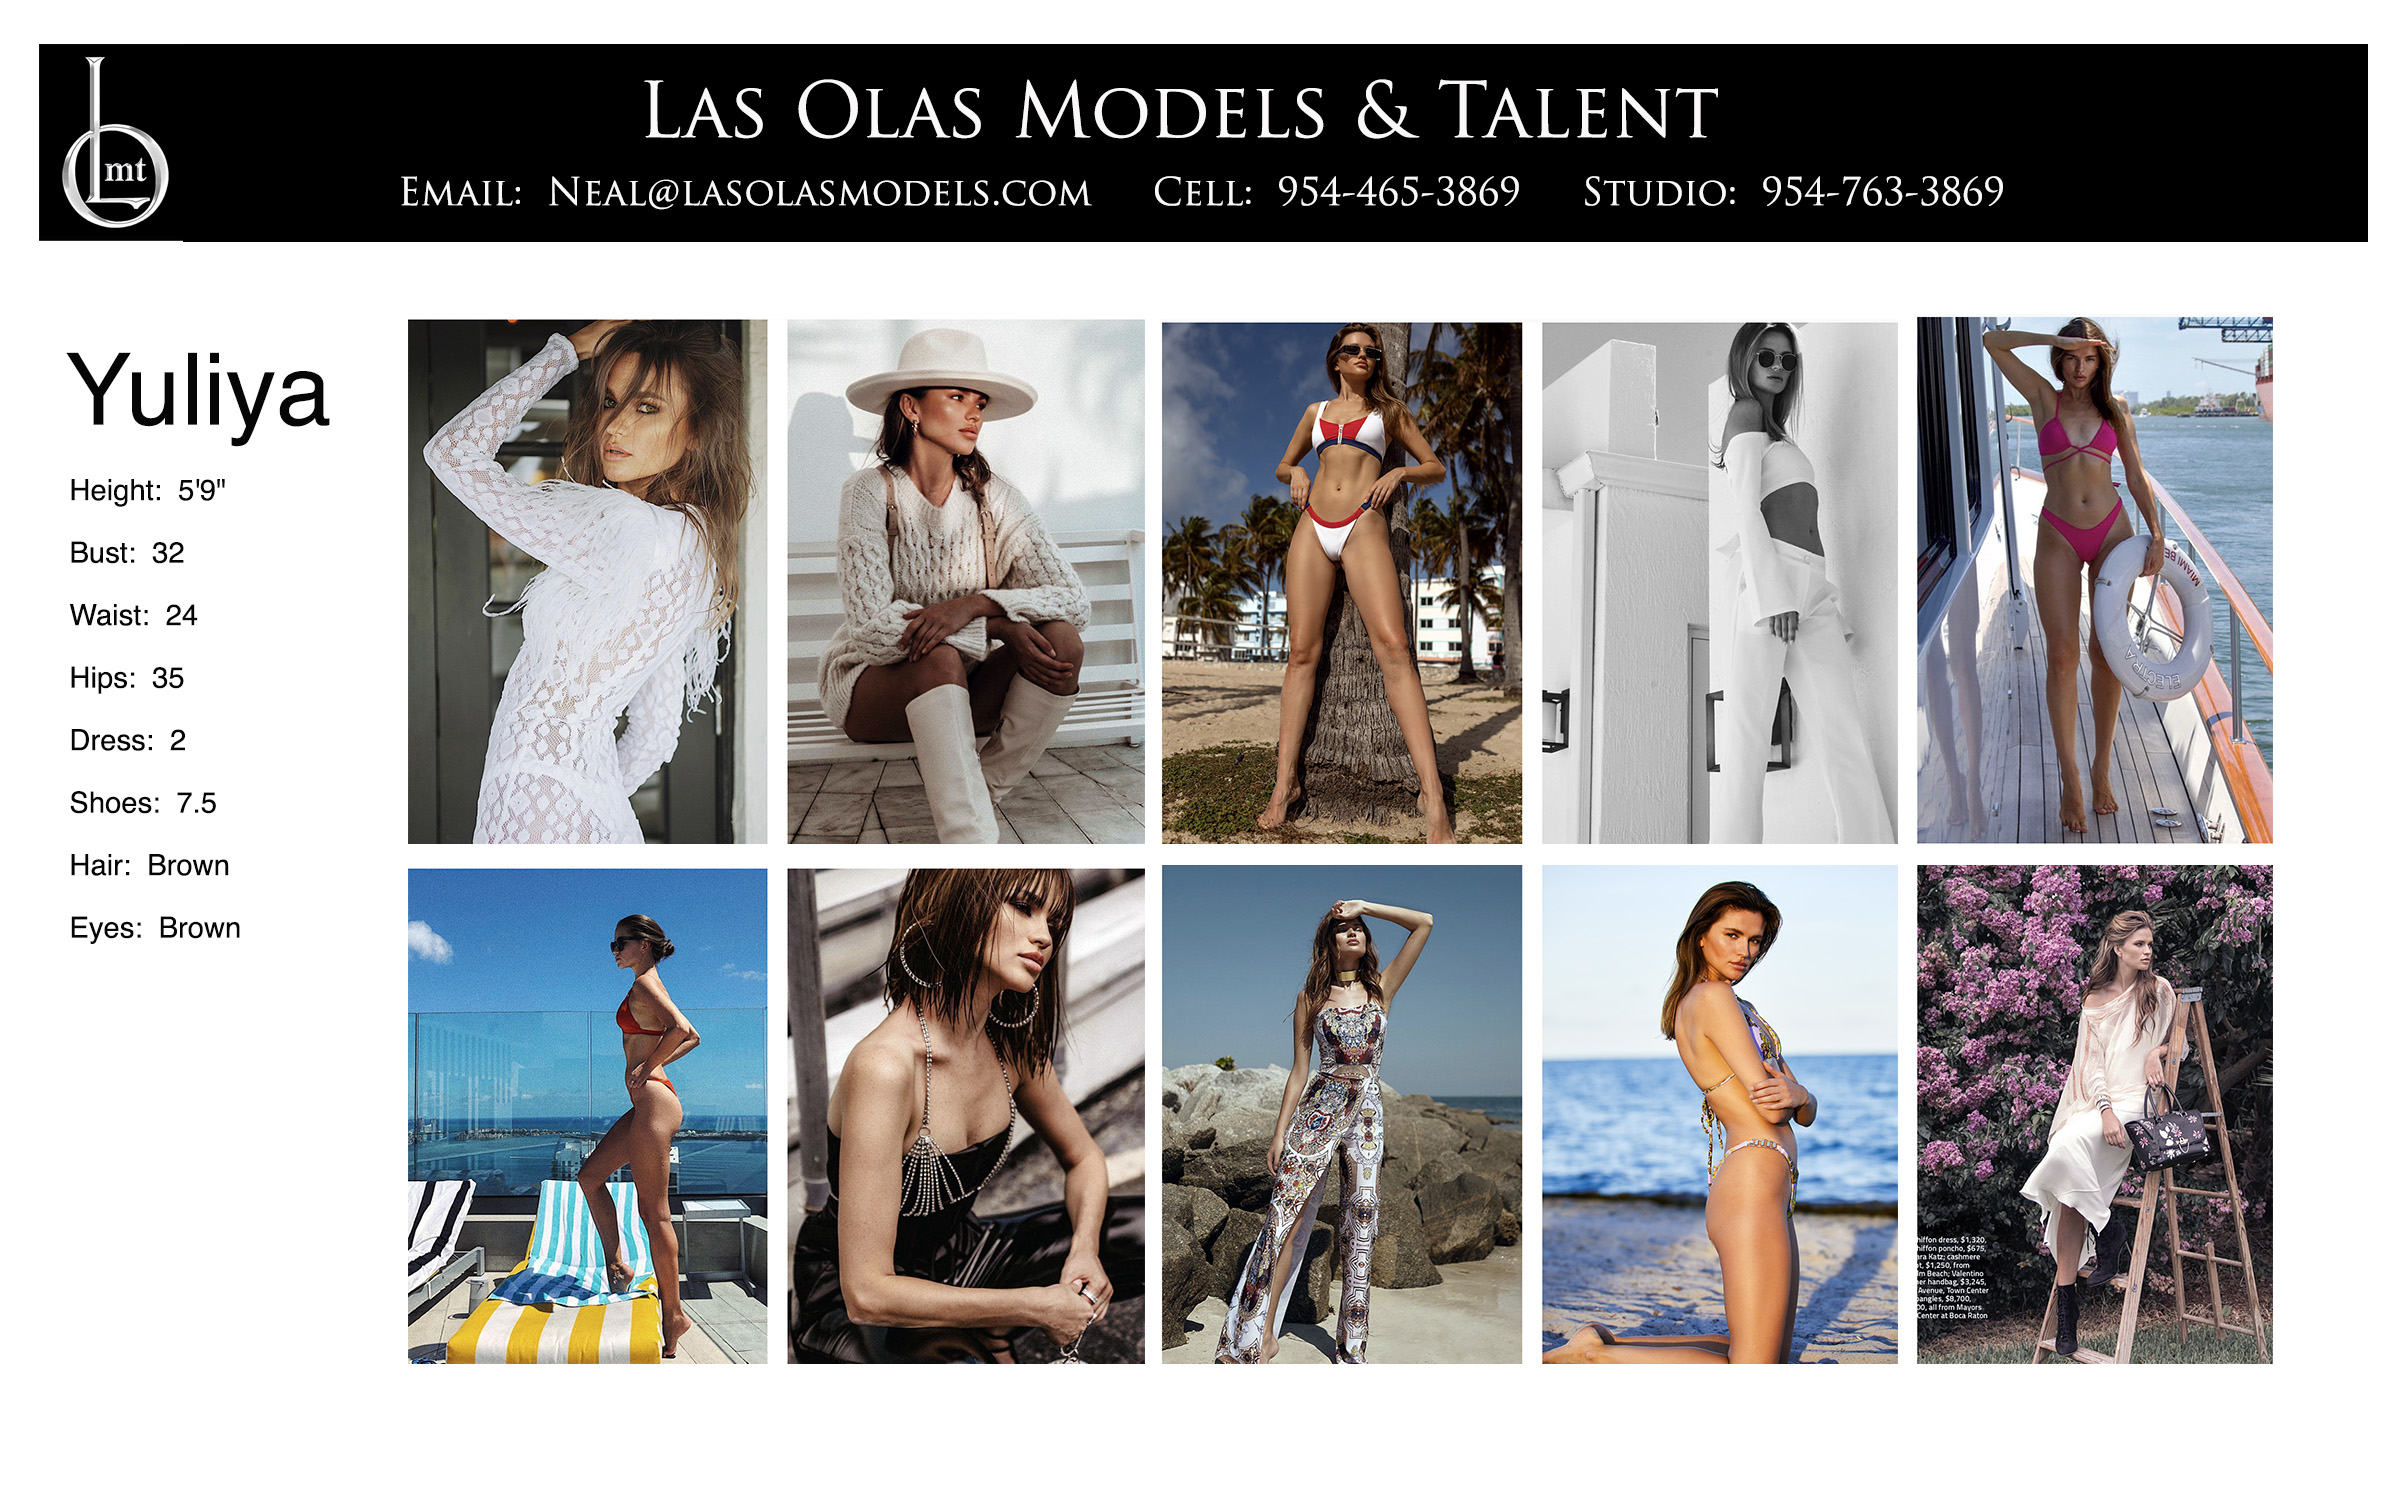 Models Female Fort Lauderdale Miami South Florida Las Olas Models & Talent, Inc. Yuliya Comp